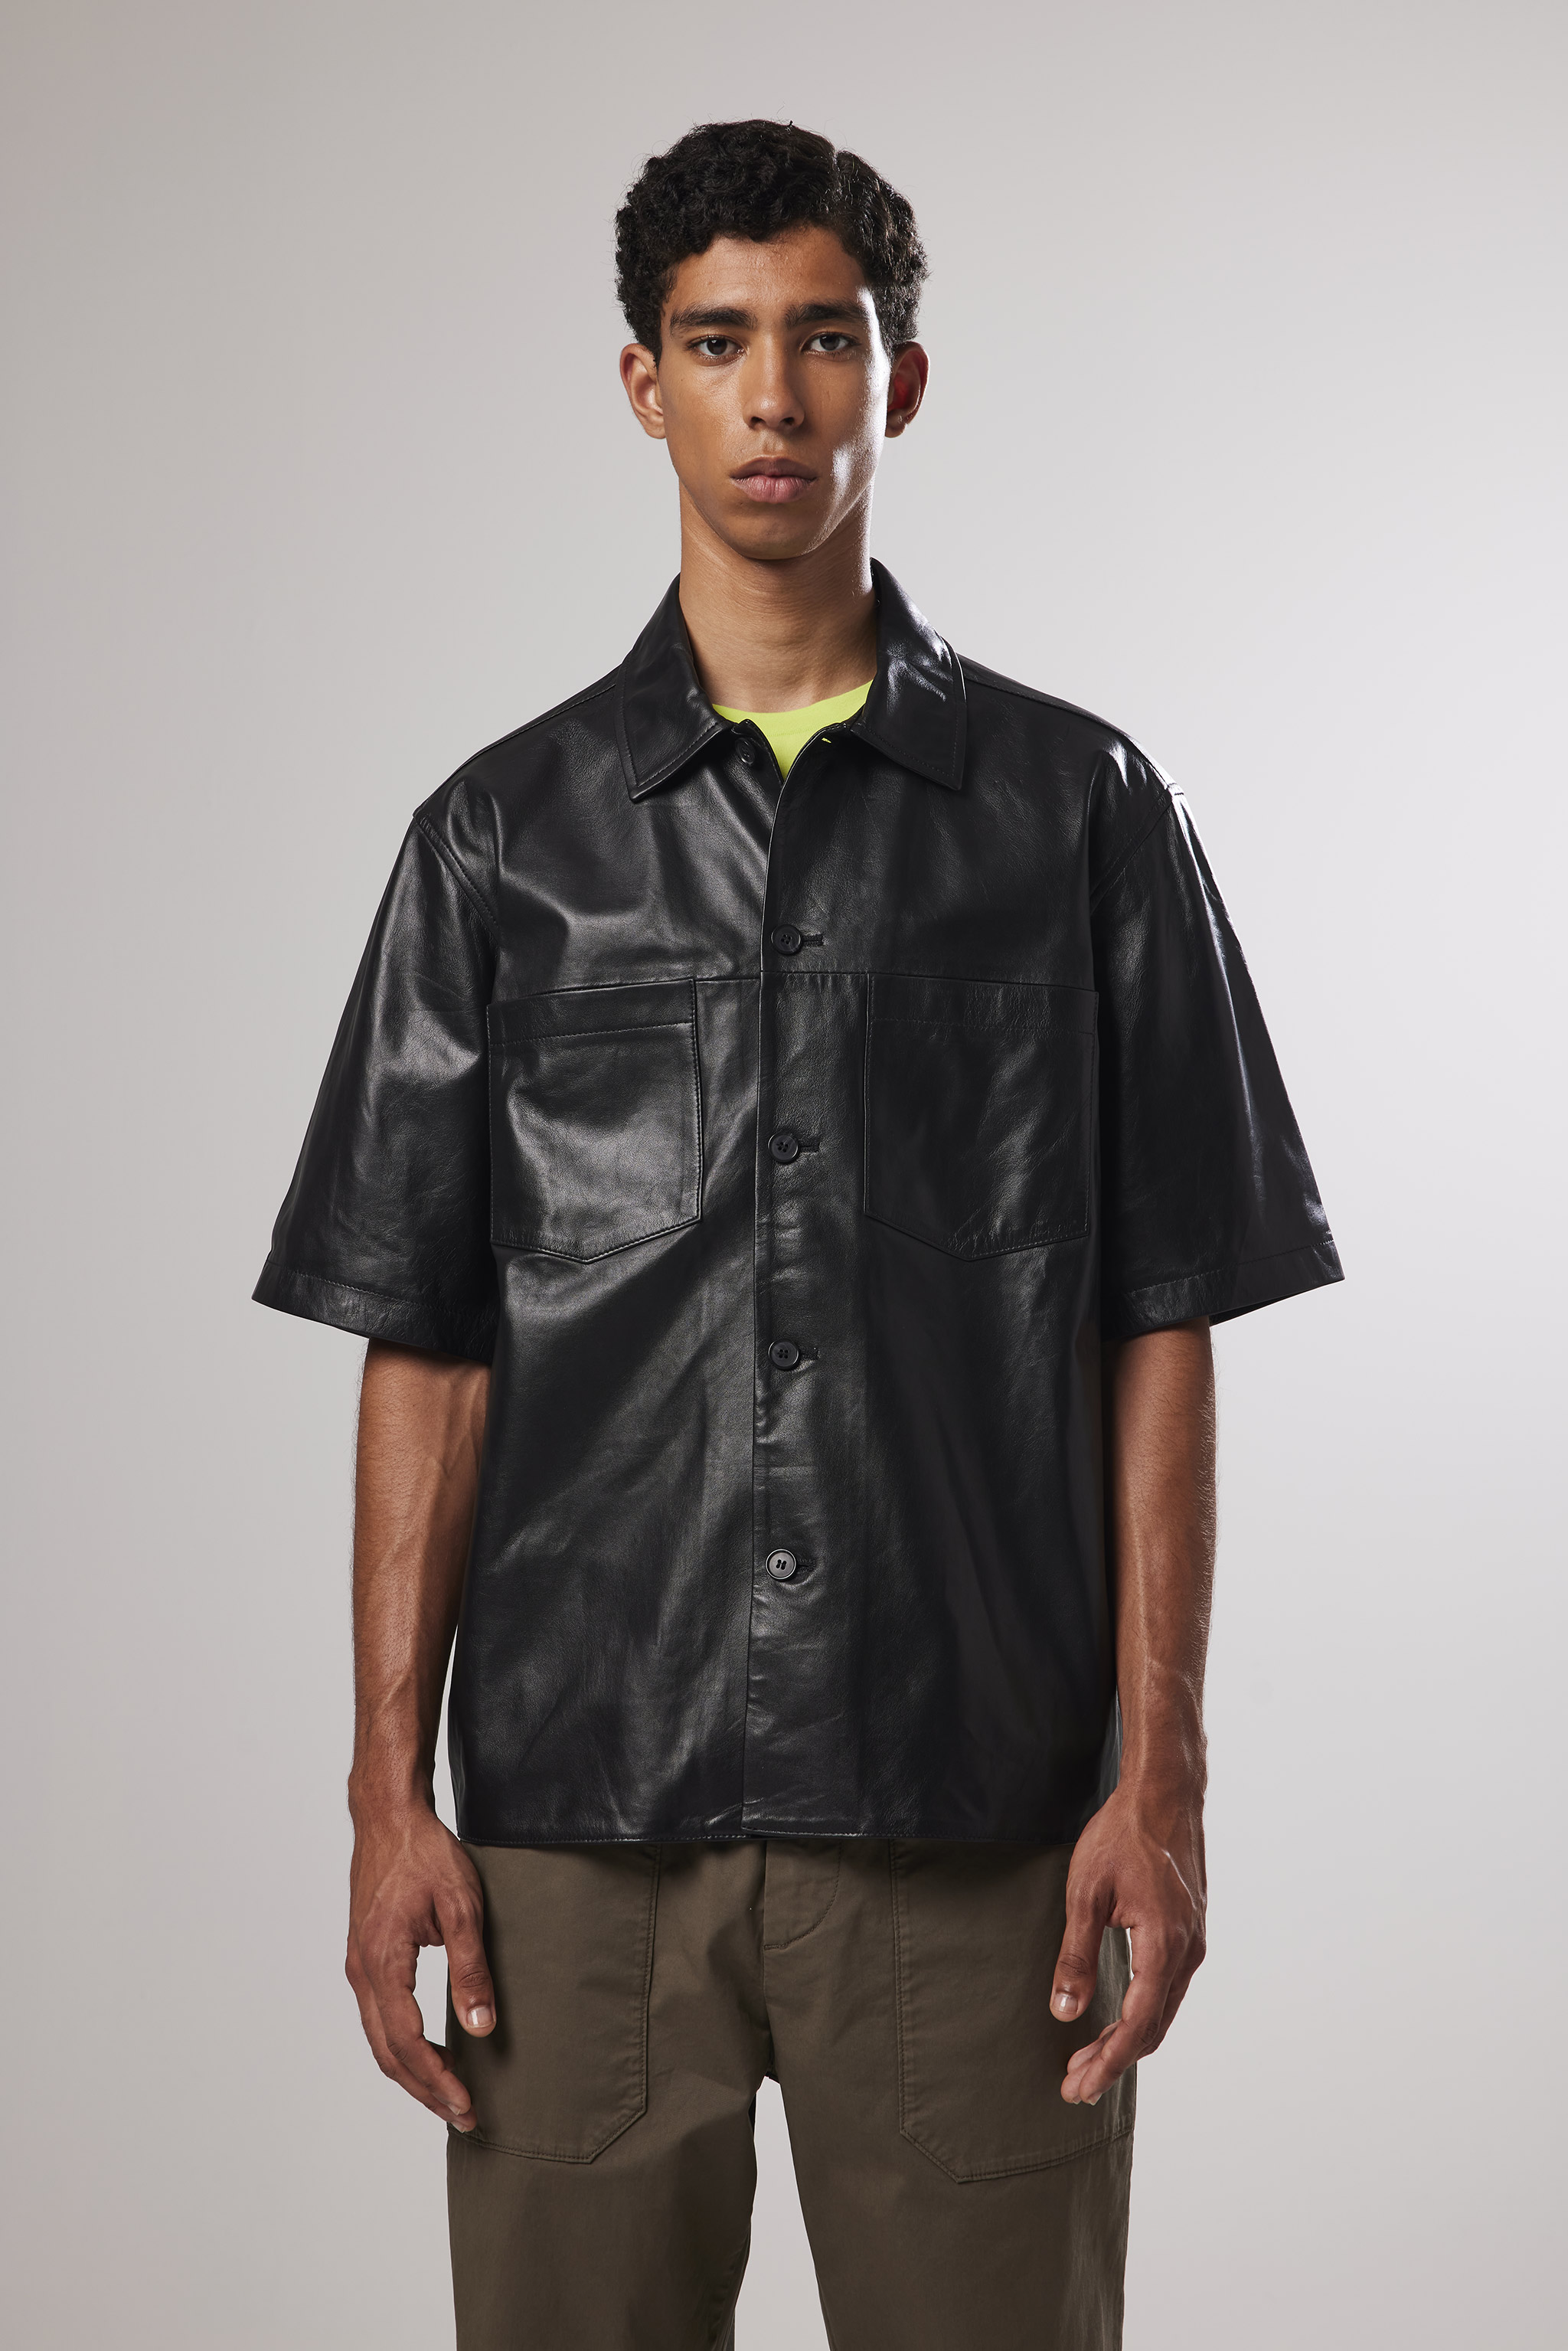 Willow 8232 men's overshirt - Black - Buy online at NN07®